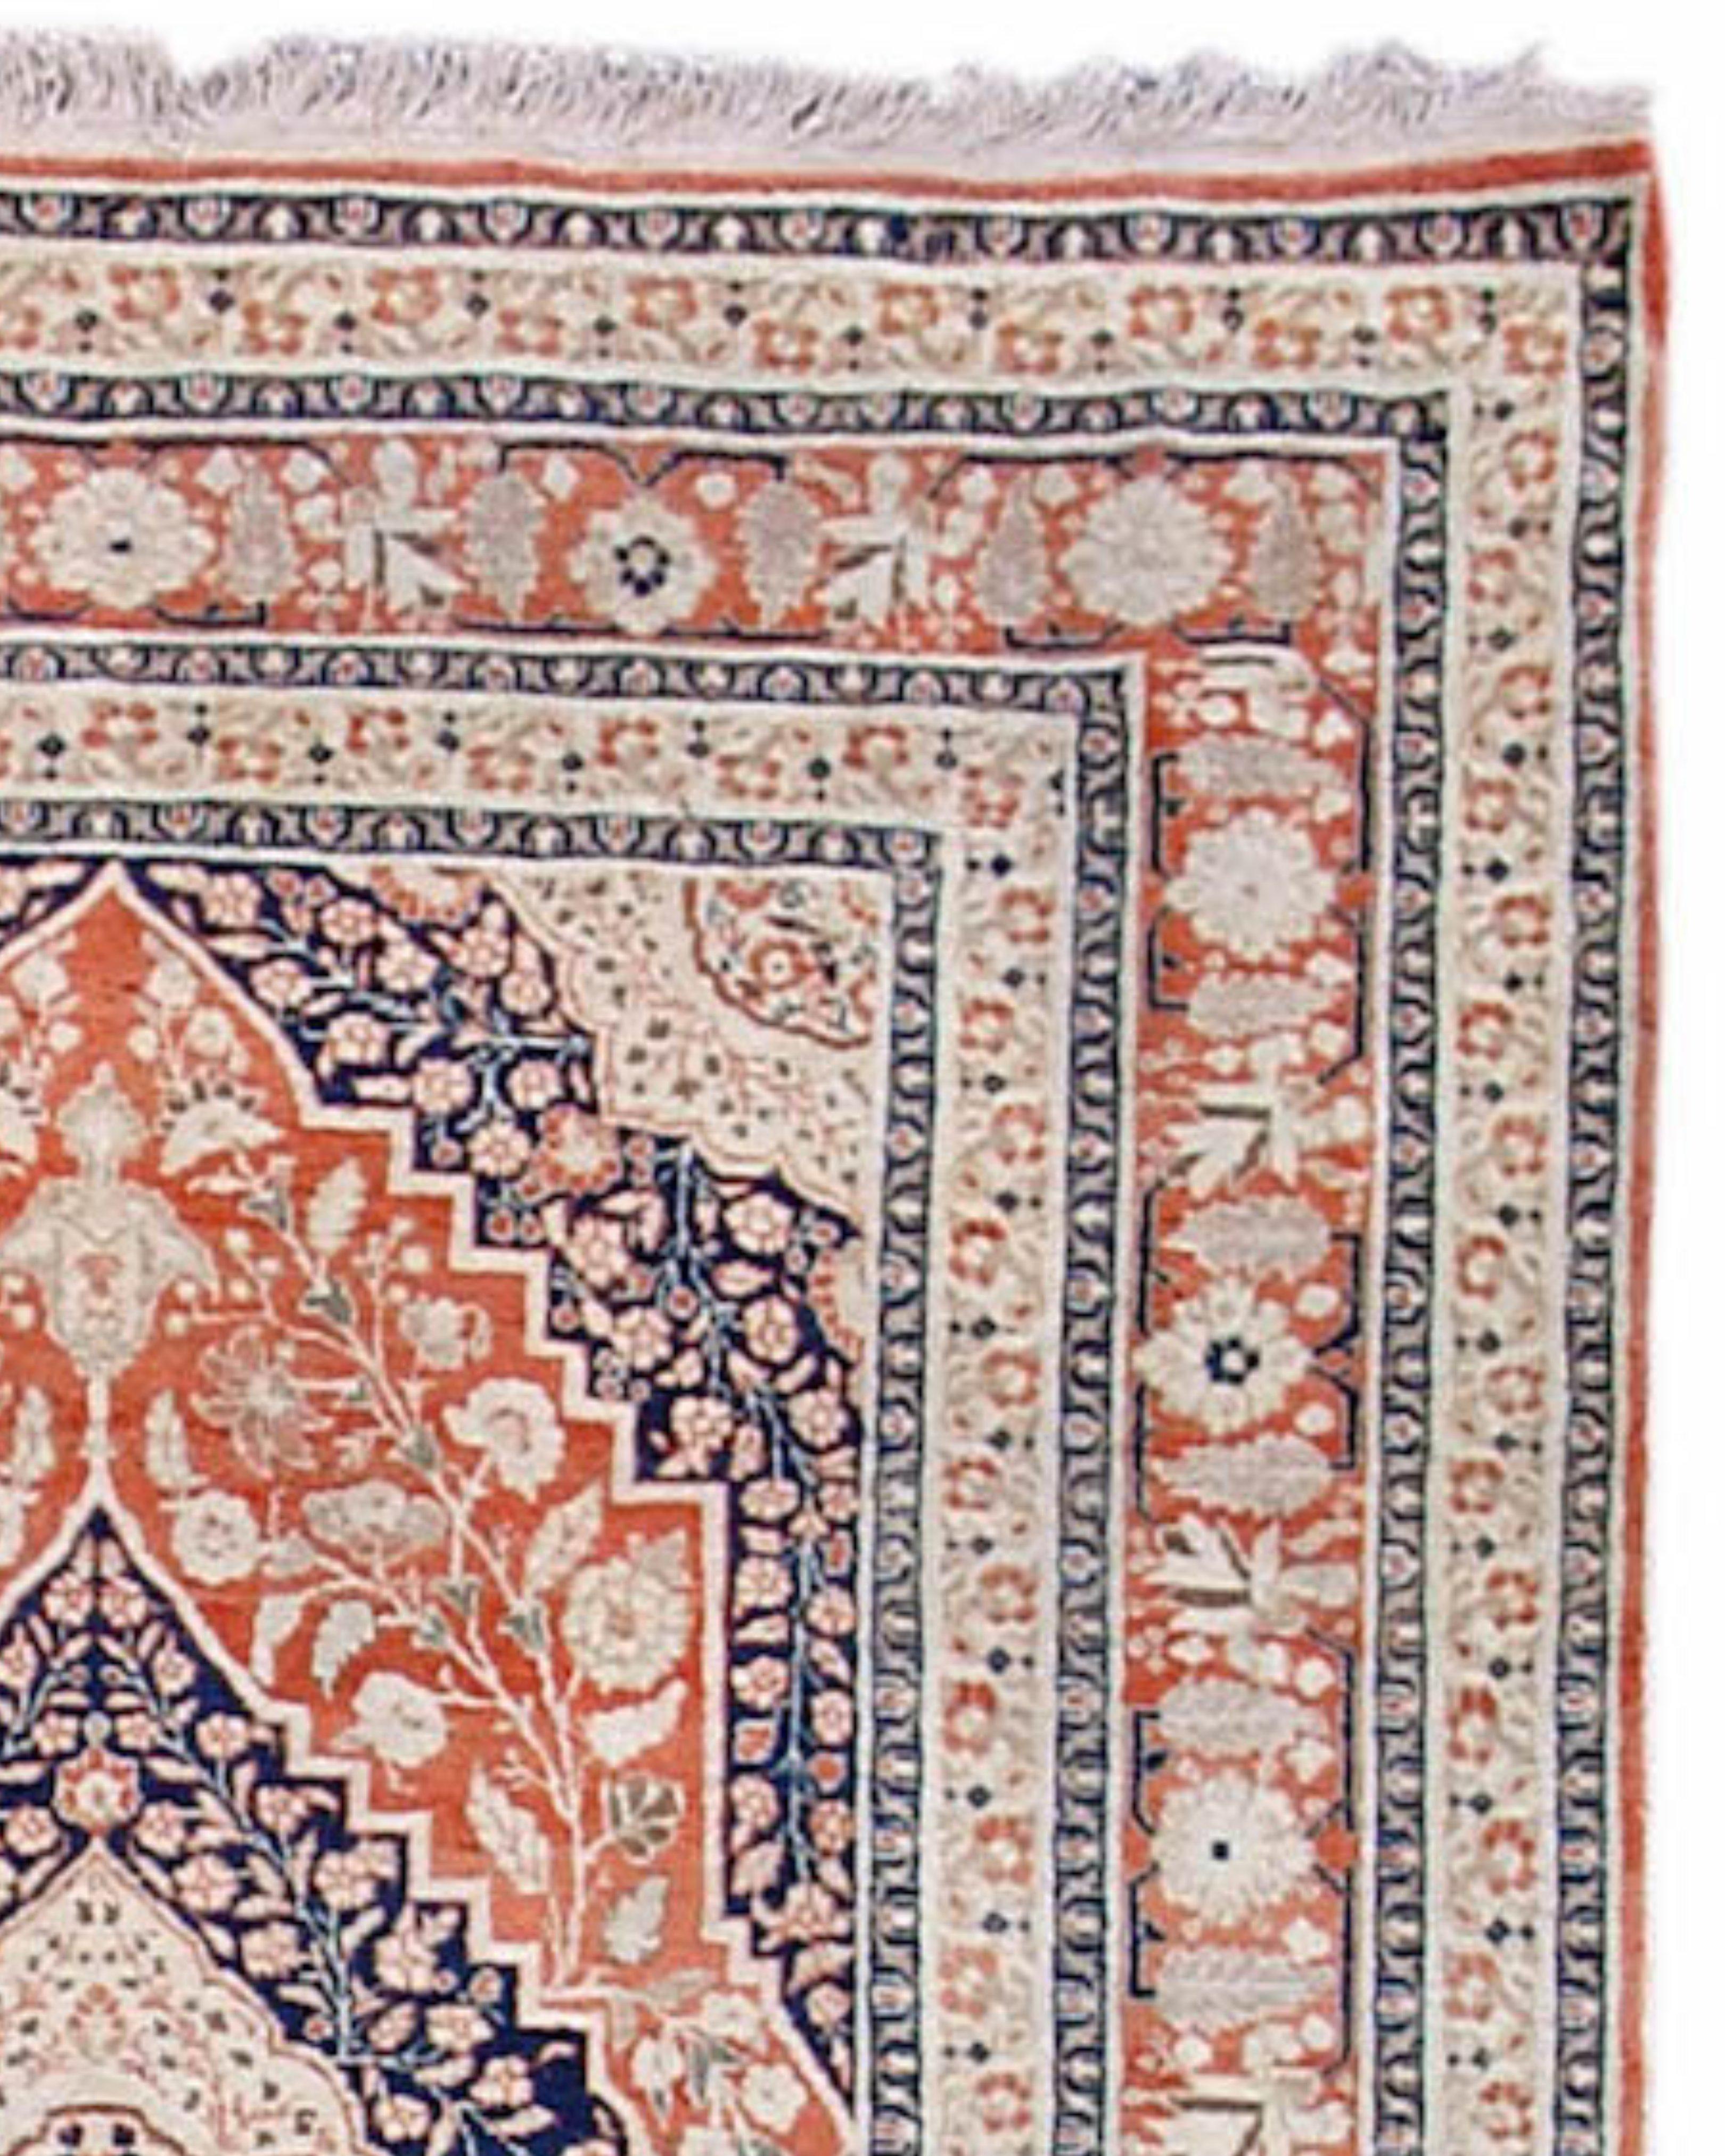 Persian Tabriz Rug, 19th Century

Additional Information:
Dimensions: 4'2